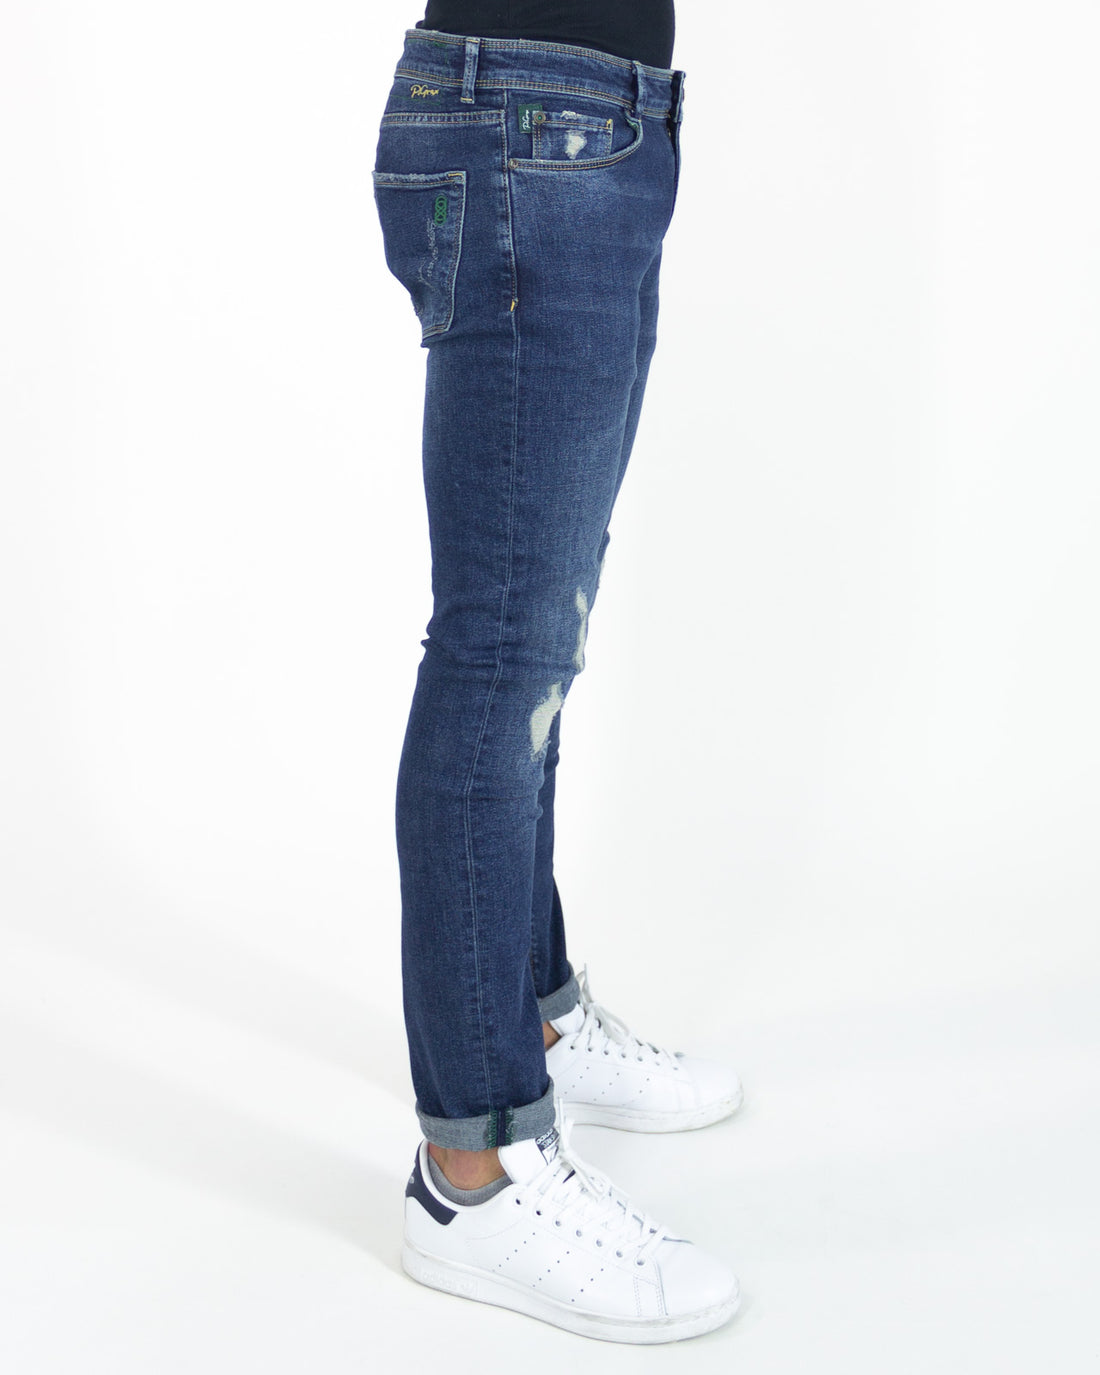 P.gtax Jeans Art. Z702 Slim Fit